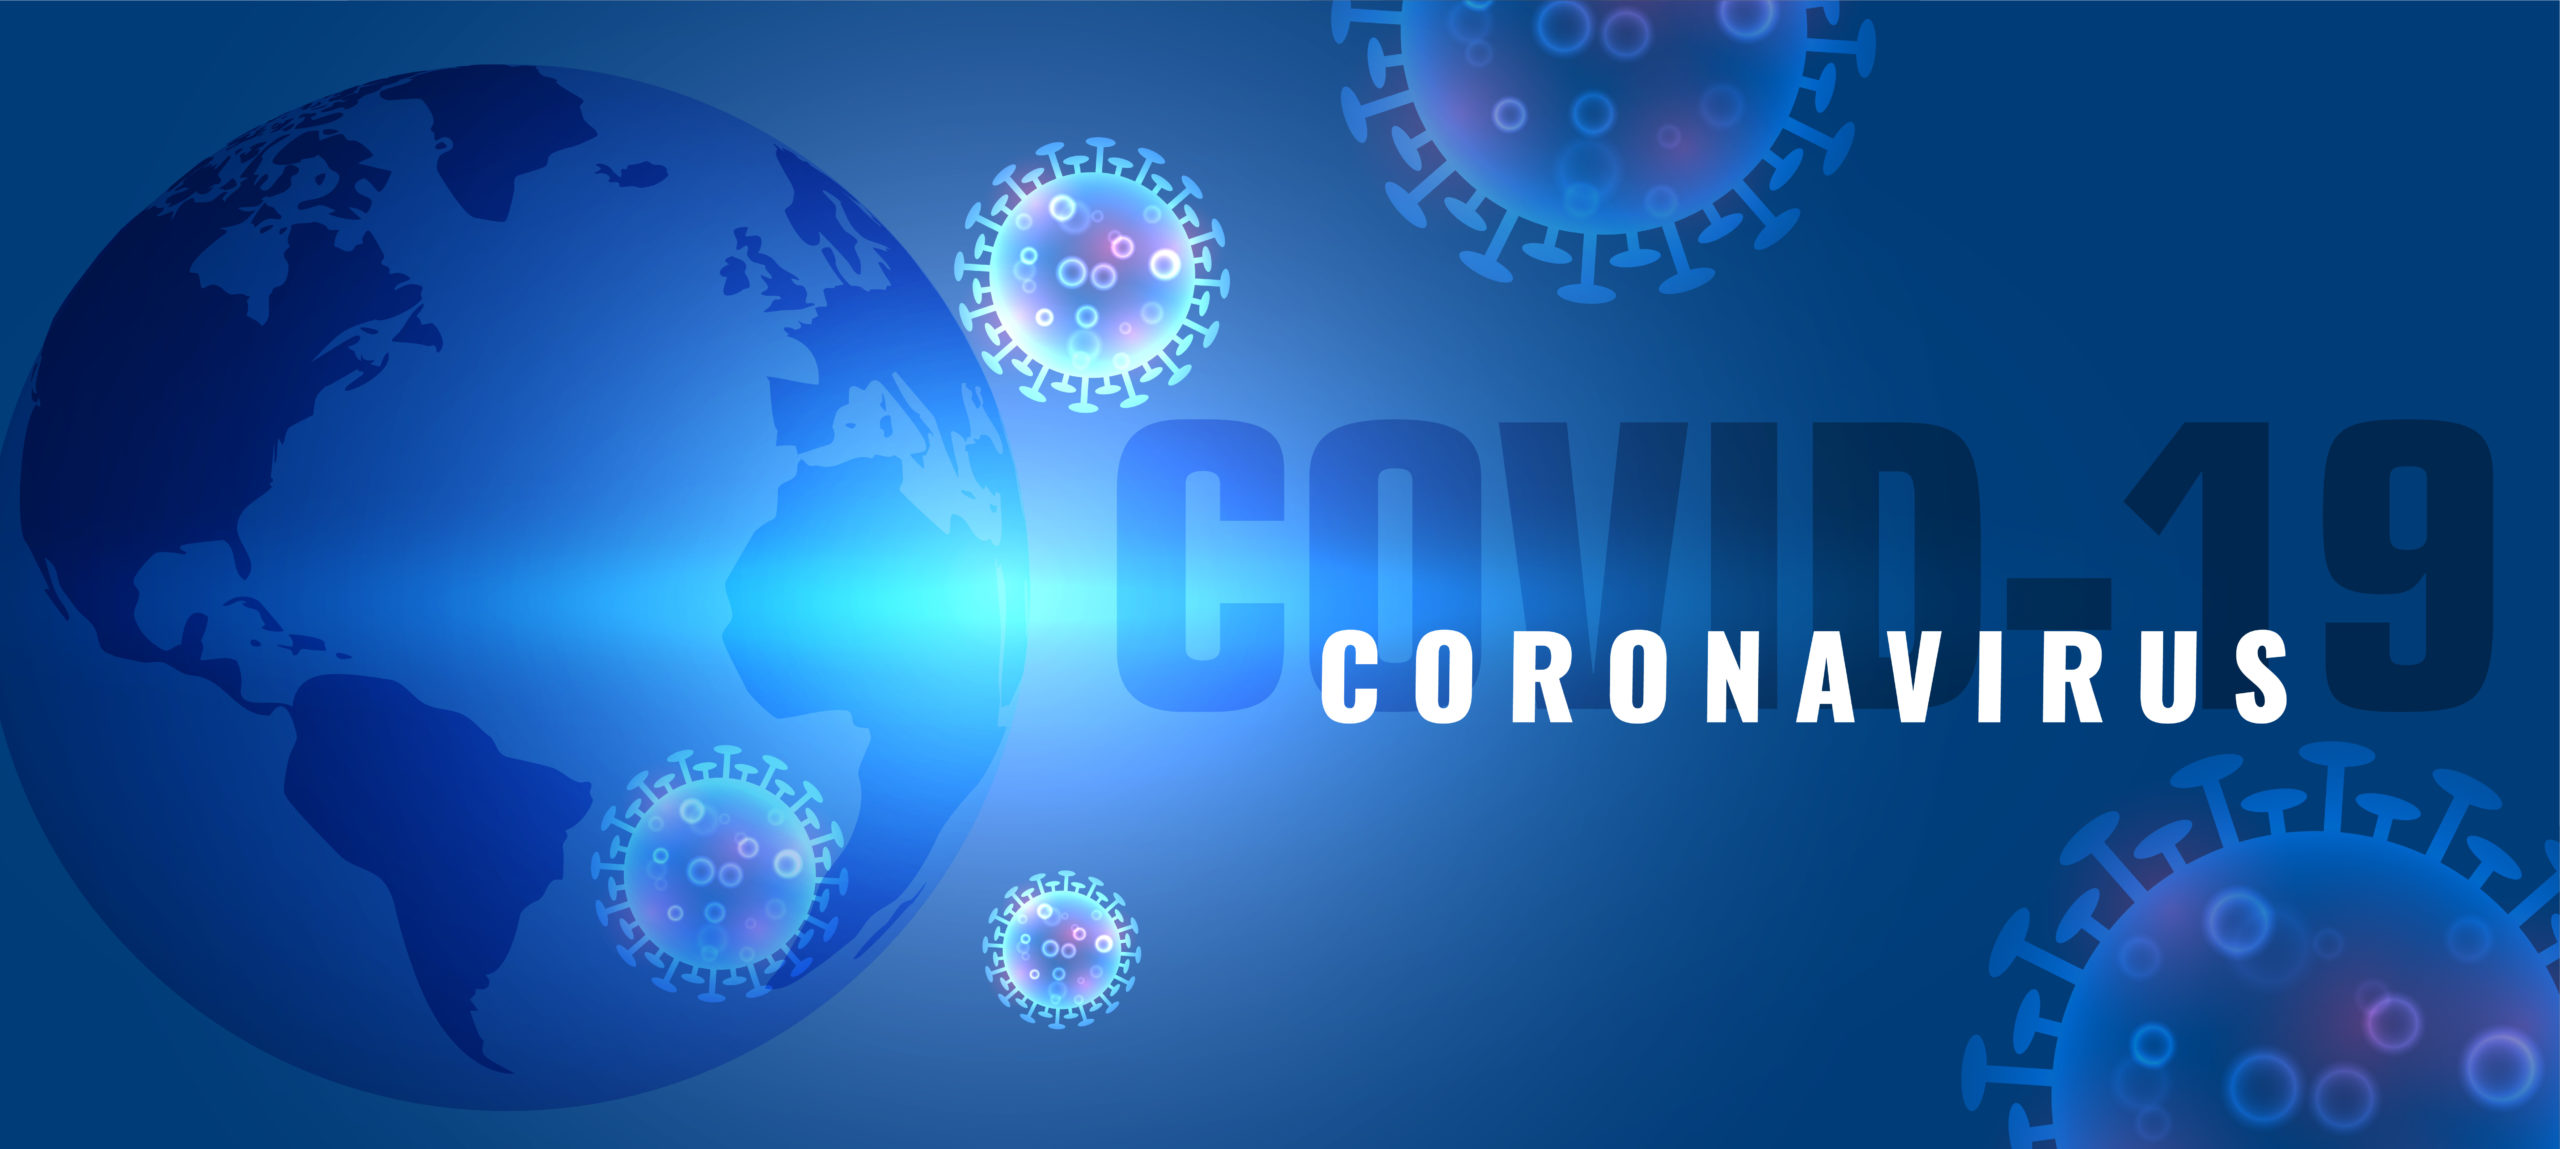 coronavirus covid-19 global pandemic disease outbreak background